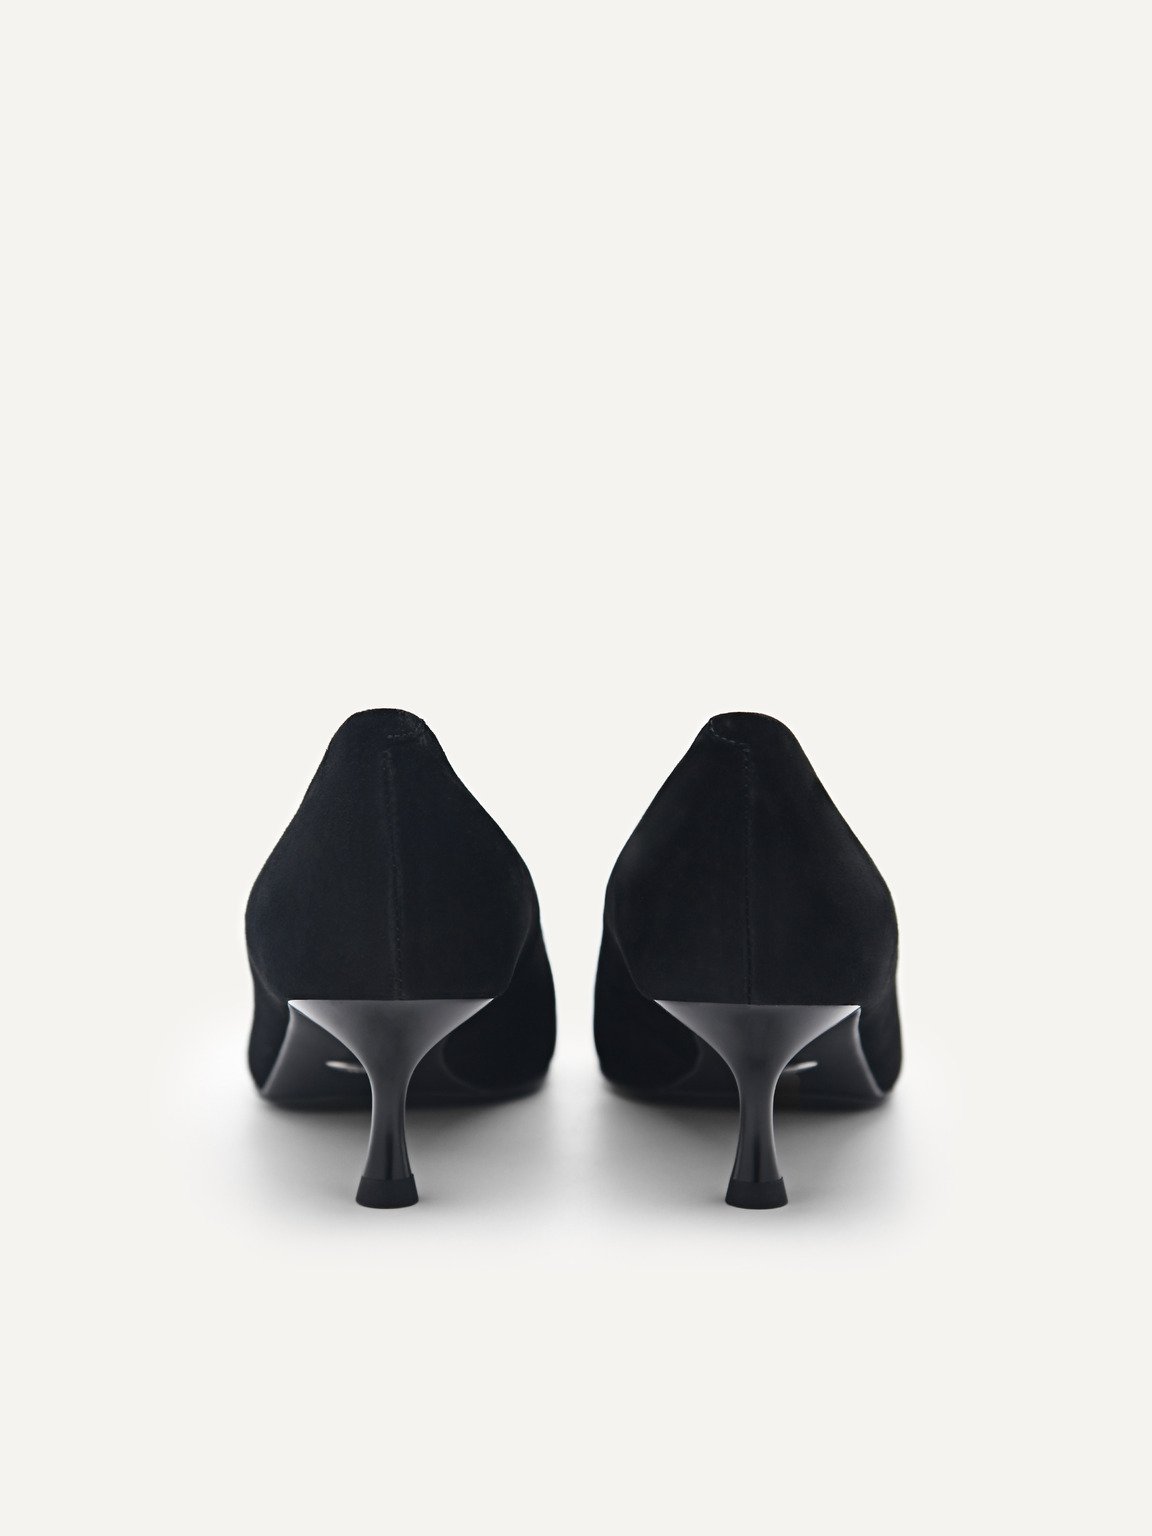 PEDRO工作室Kate皮革高跟鞋, 黑色